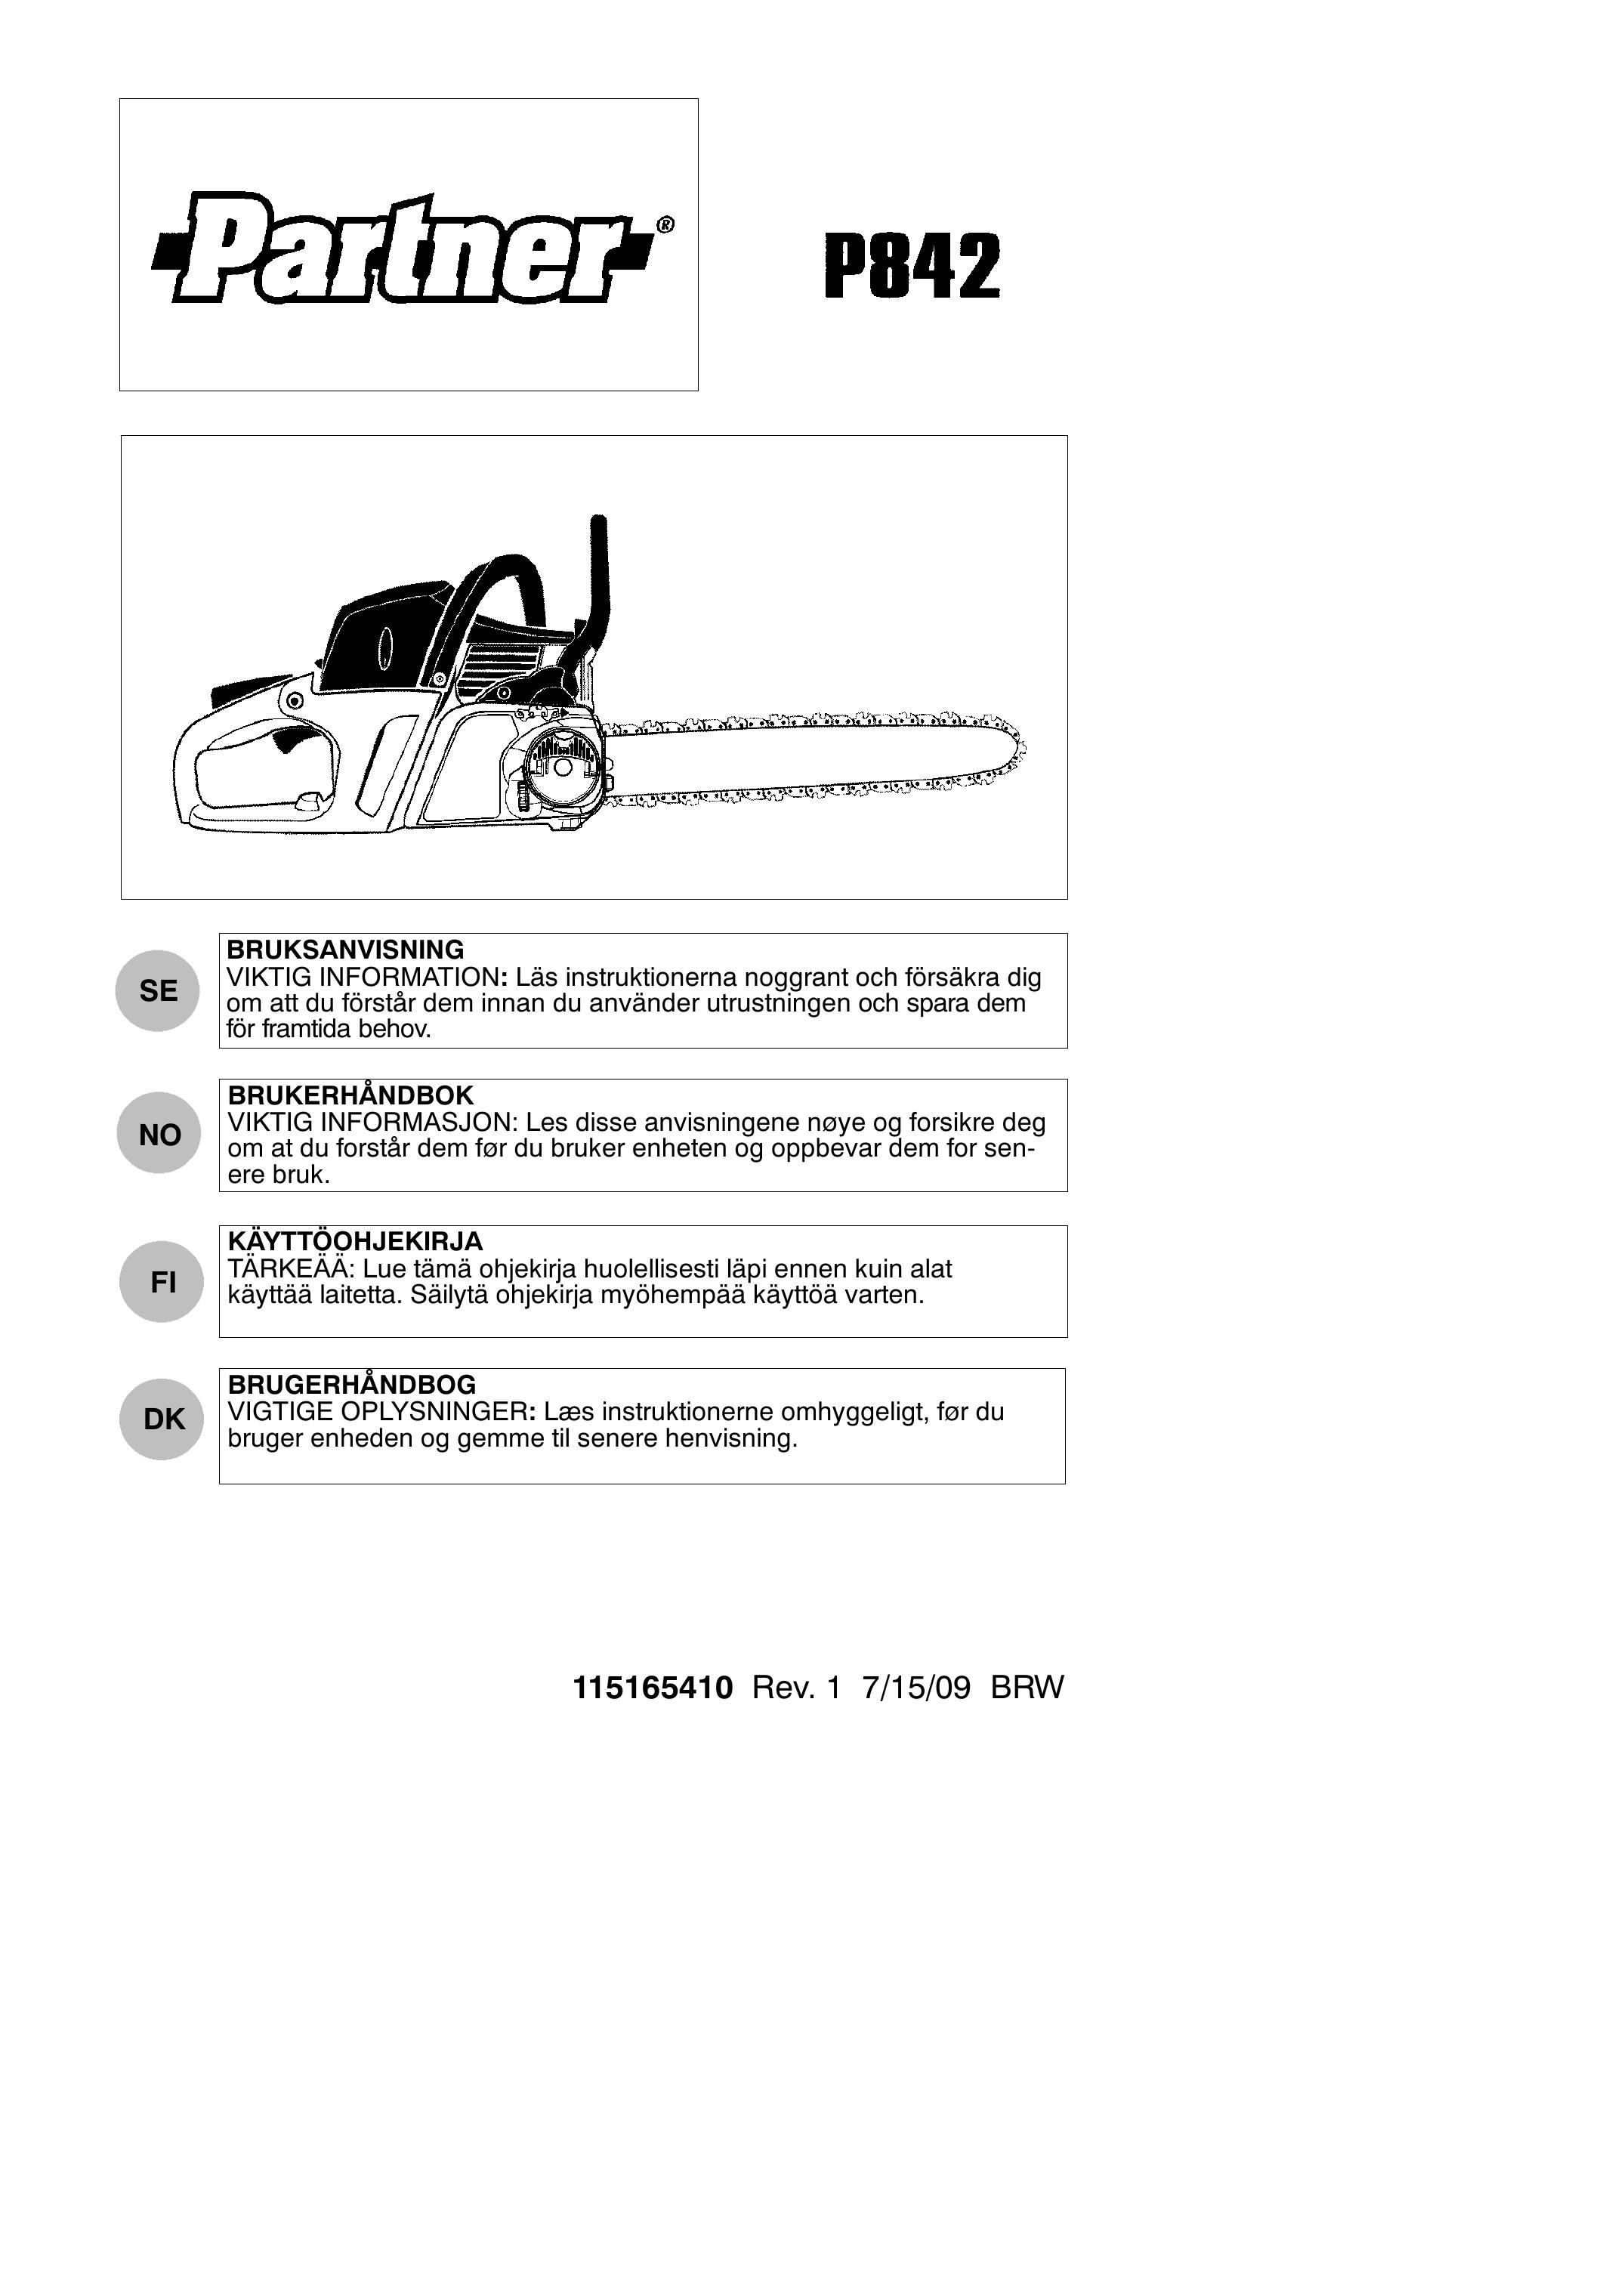 Partner Tech P842 Chainsaw User Manual